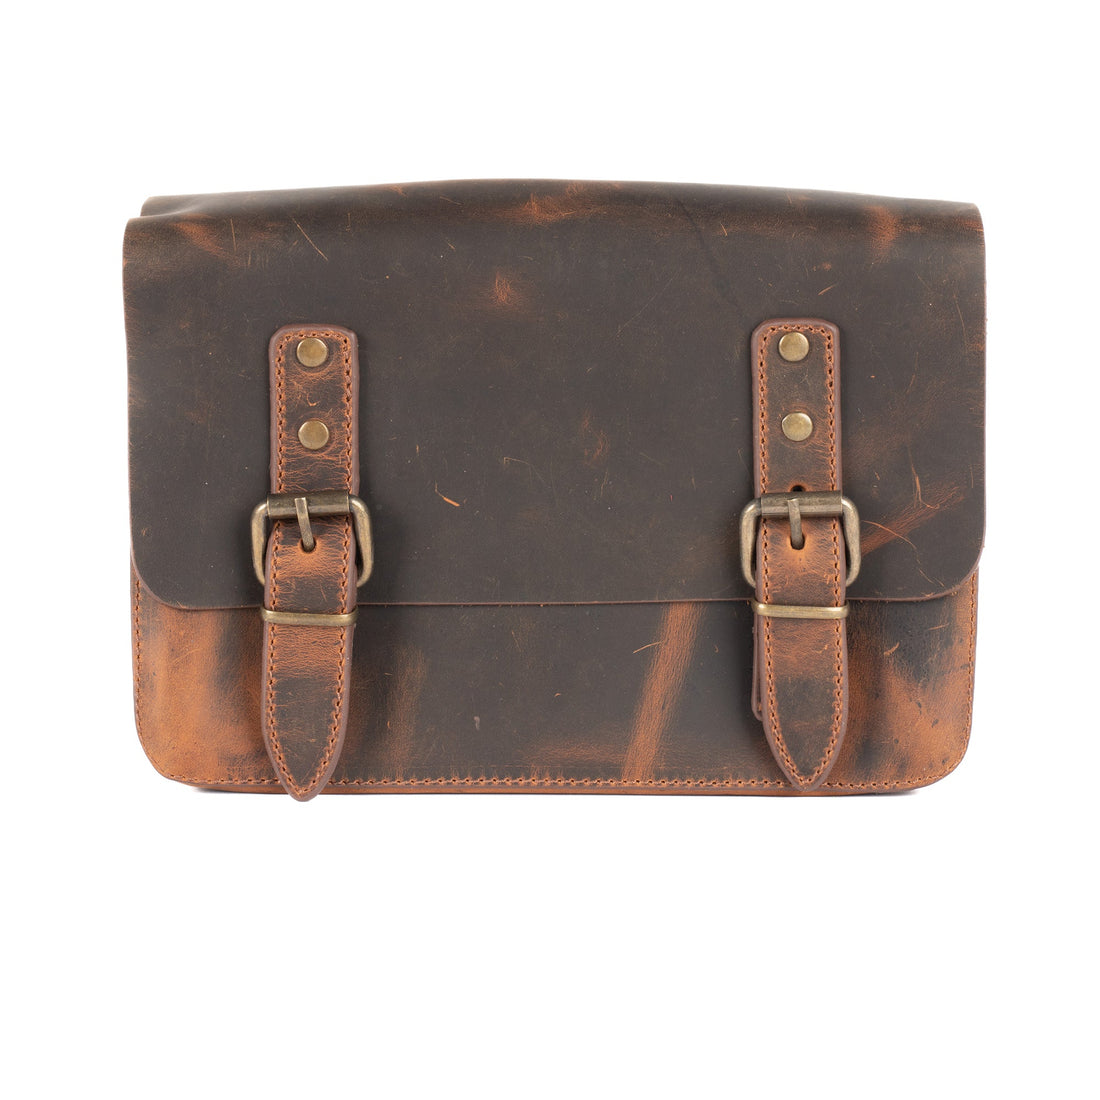 Ocean Ray Leather Clutche Bag - Chestnut Brown - Accessories Zengoda Shop online from Artisan Brands